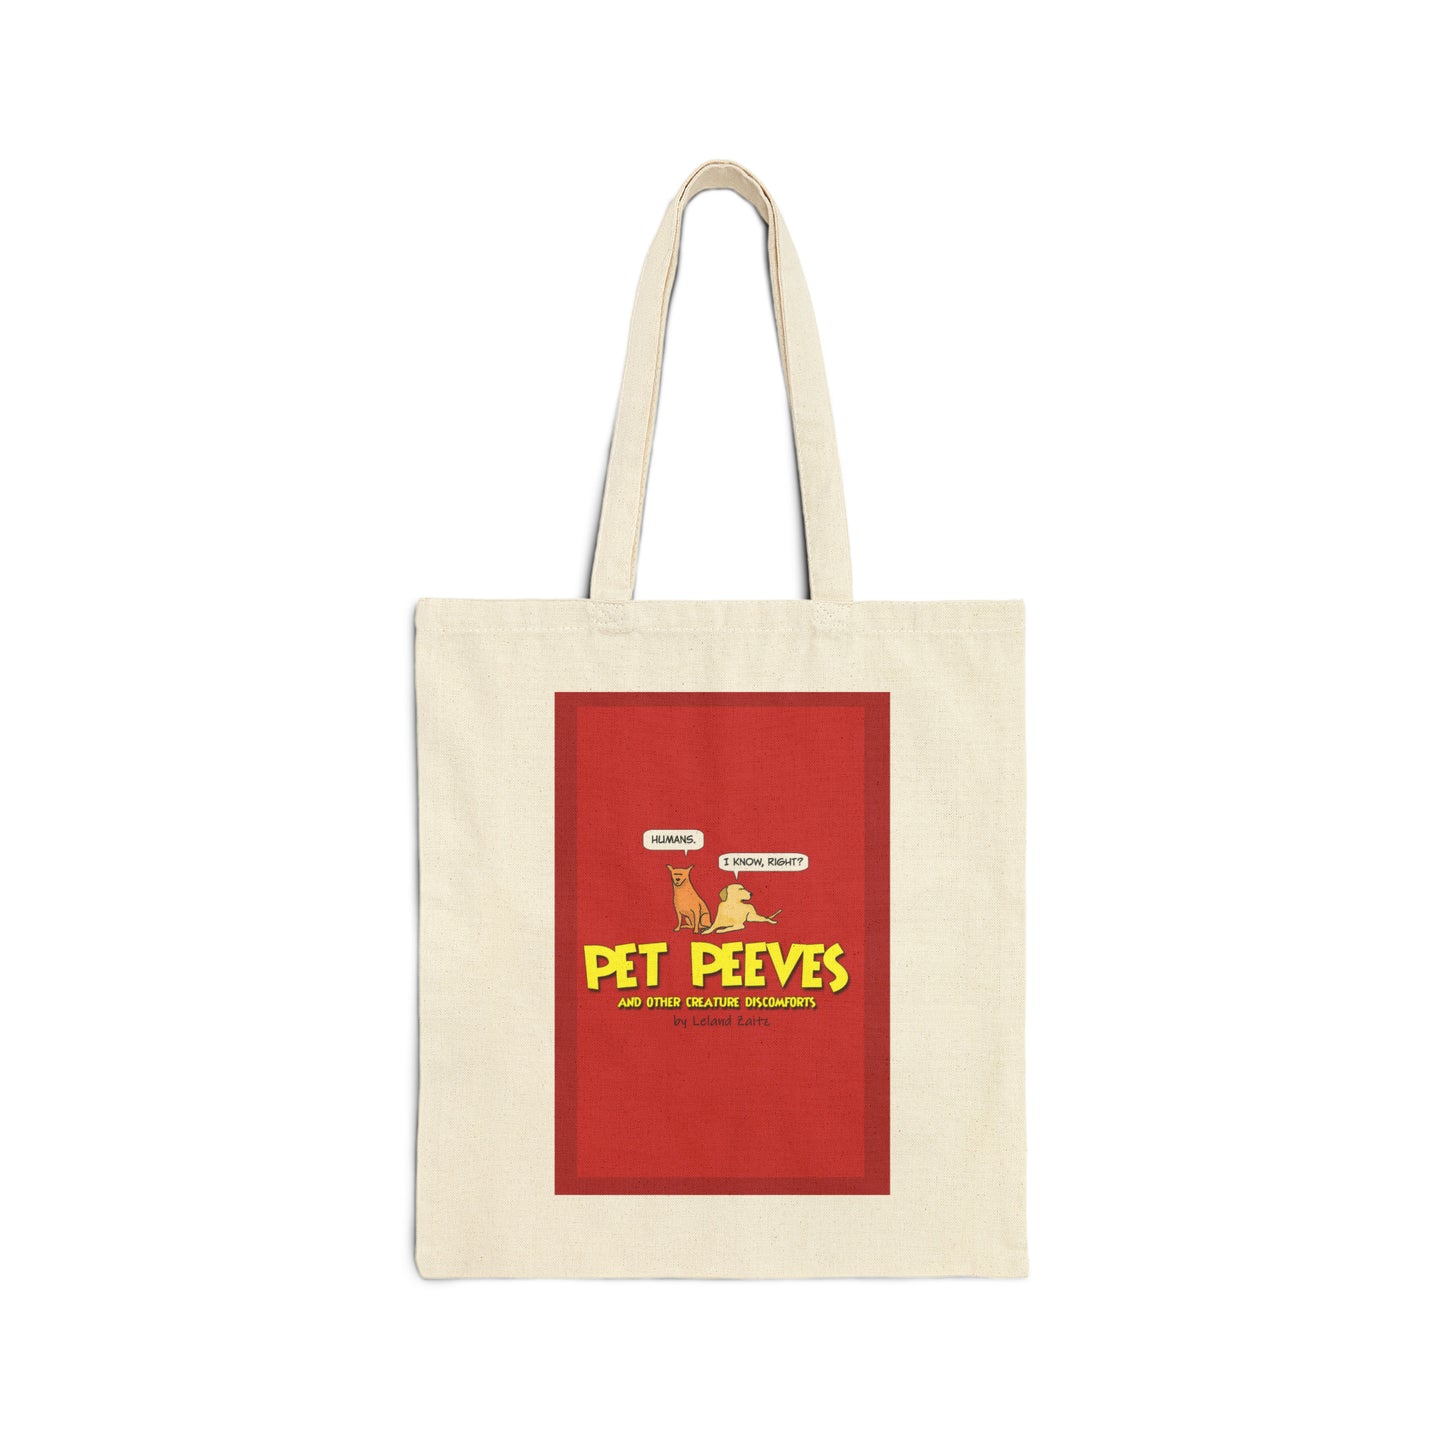 Pet Peeves - Cotton Canvas Tote Bag